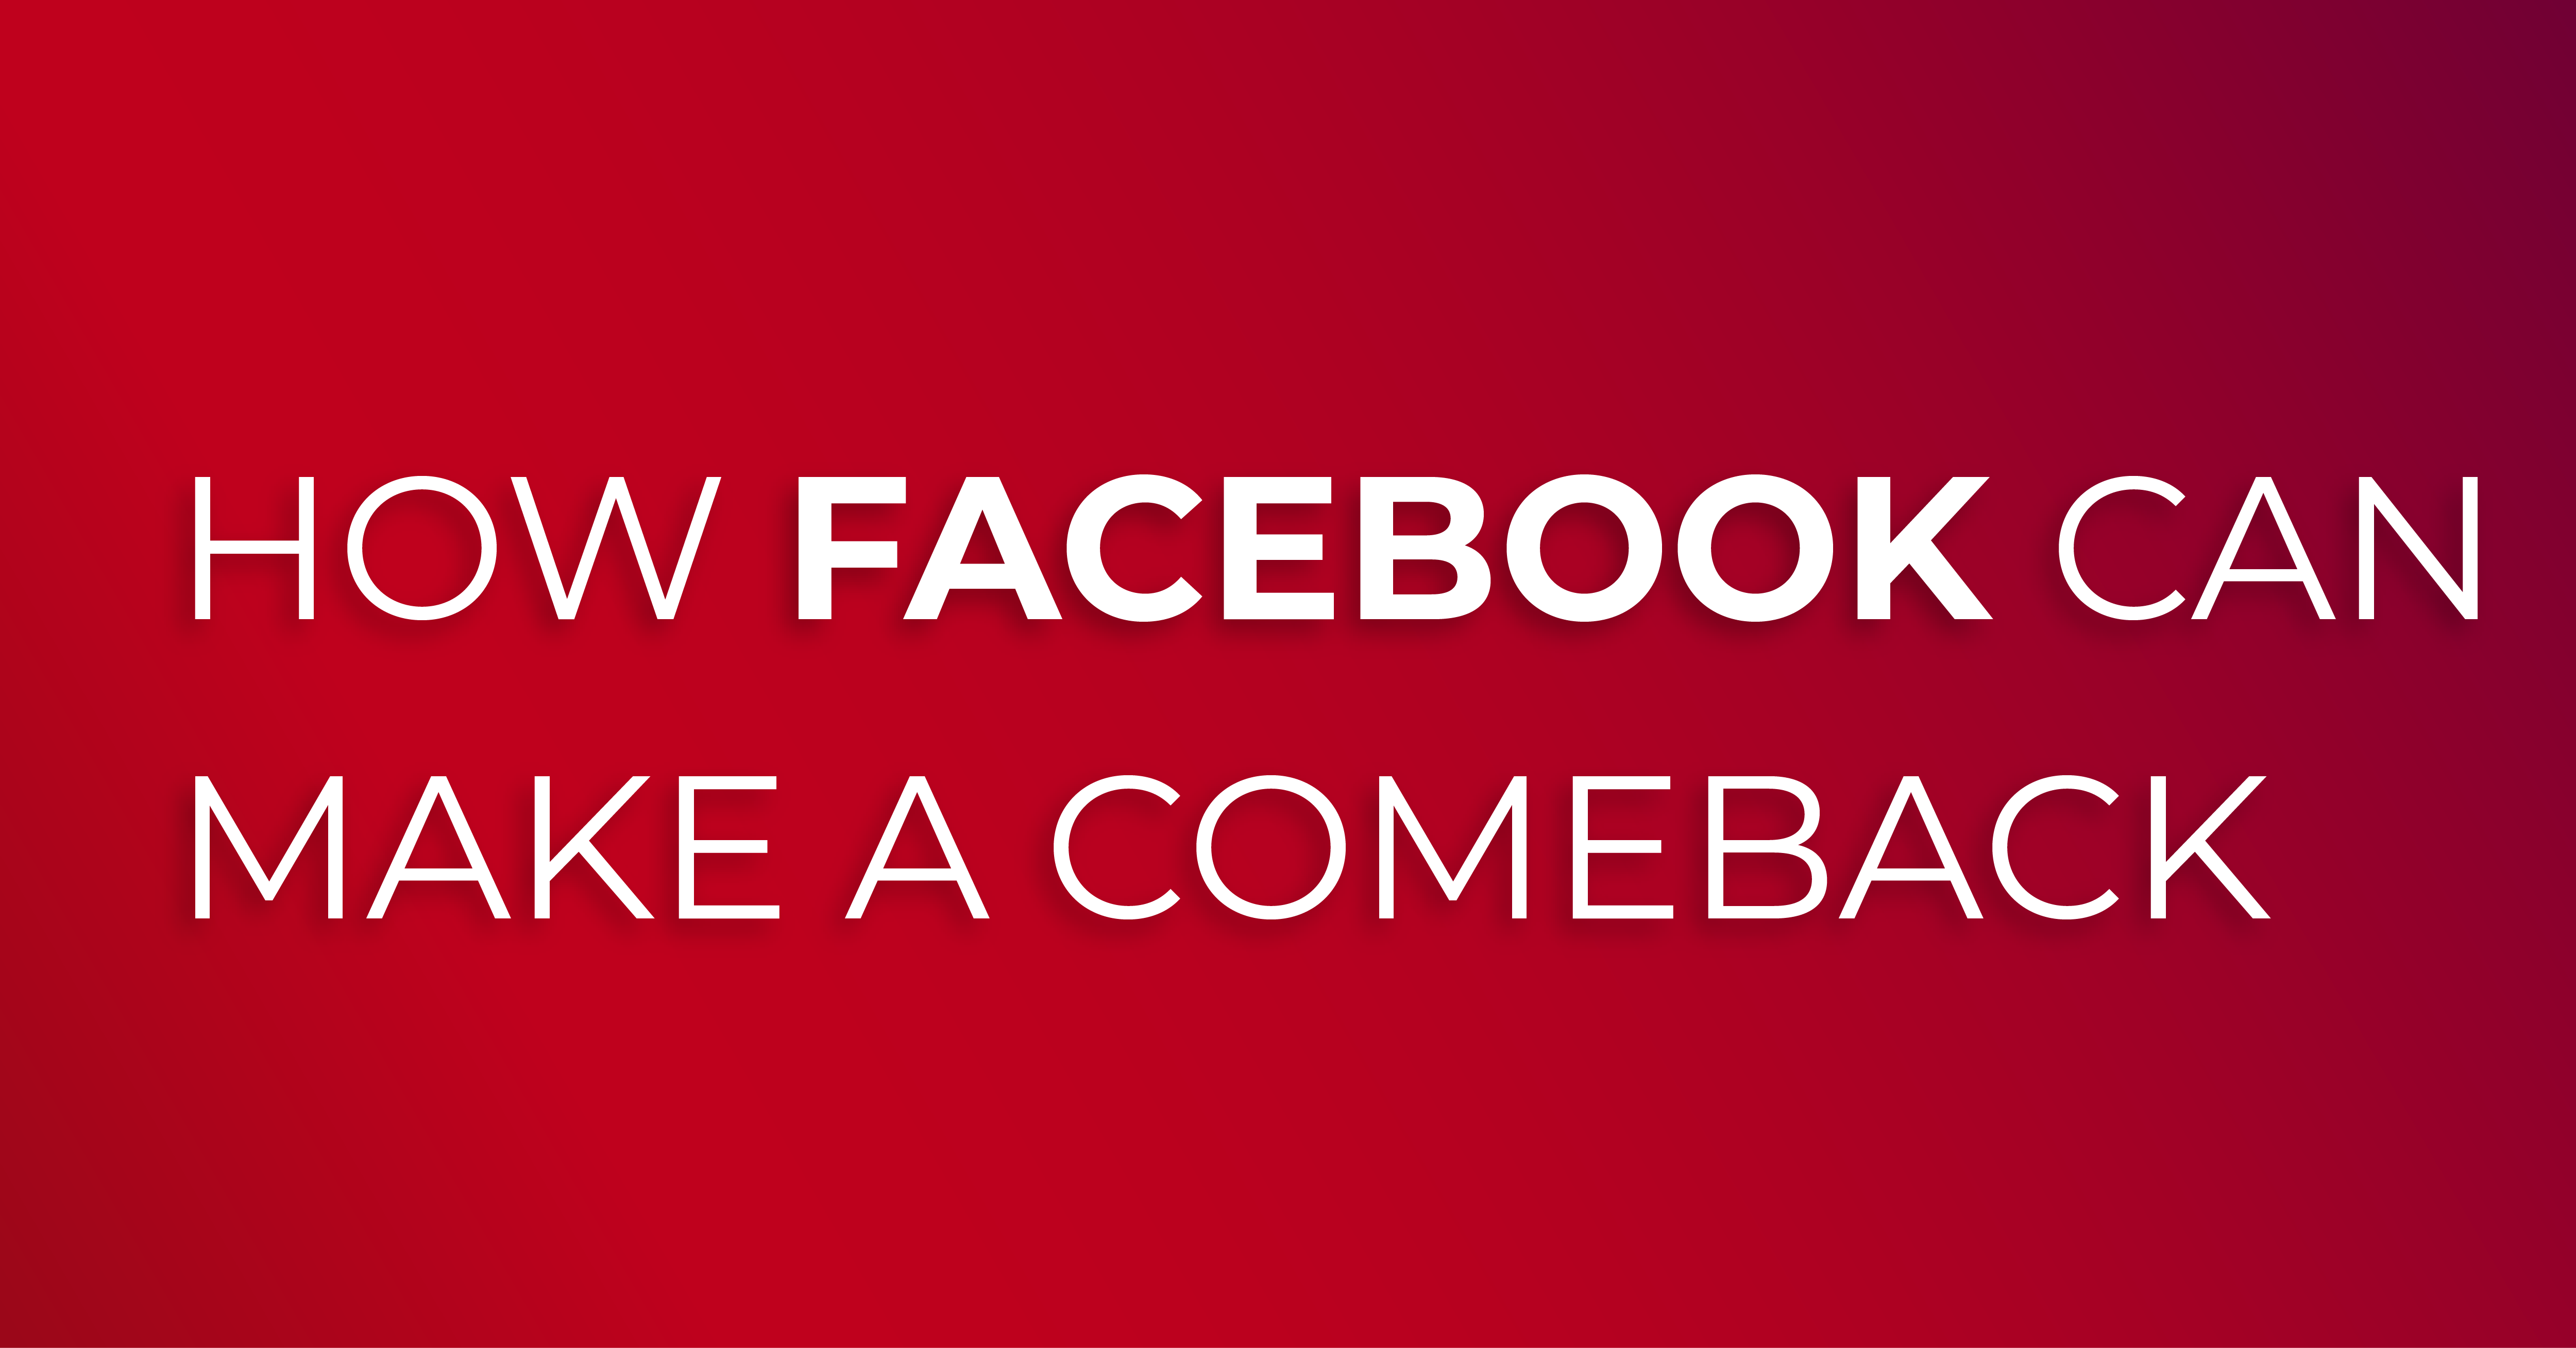 how-facebook-can-make-a-comeback